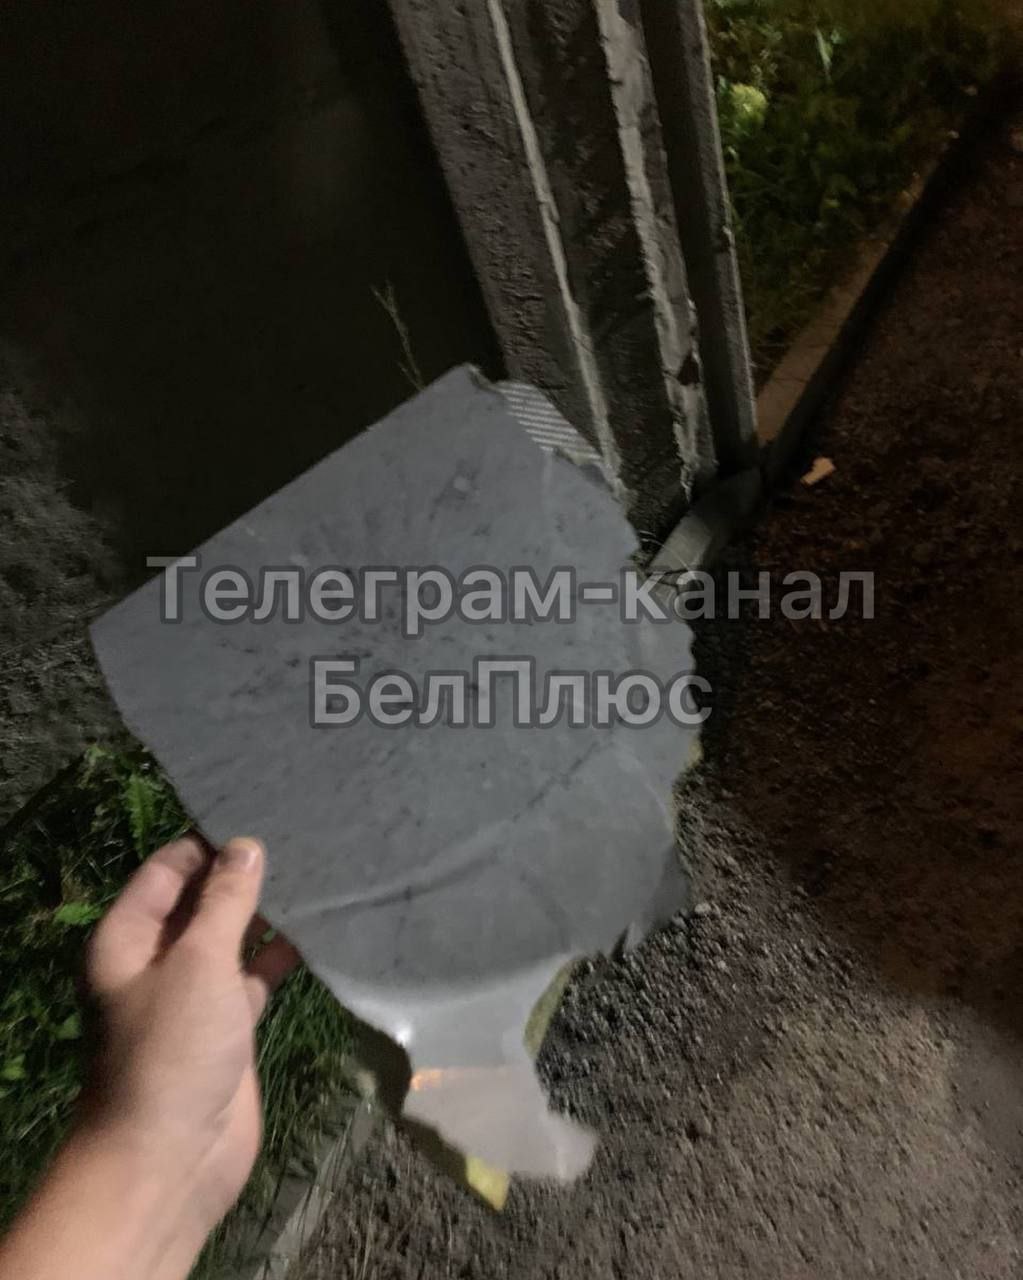 Обломок беспилотника после атаки на Белгород 11 сентября. Фото: телеграм-канал БелПлюс